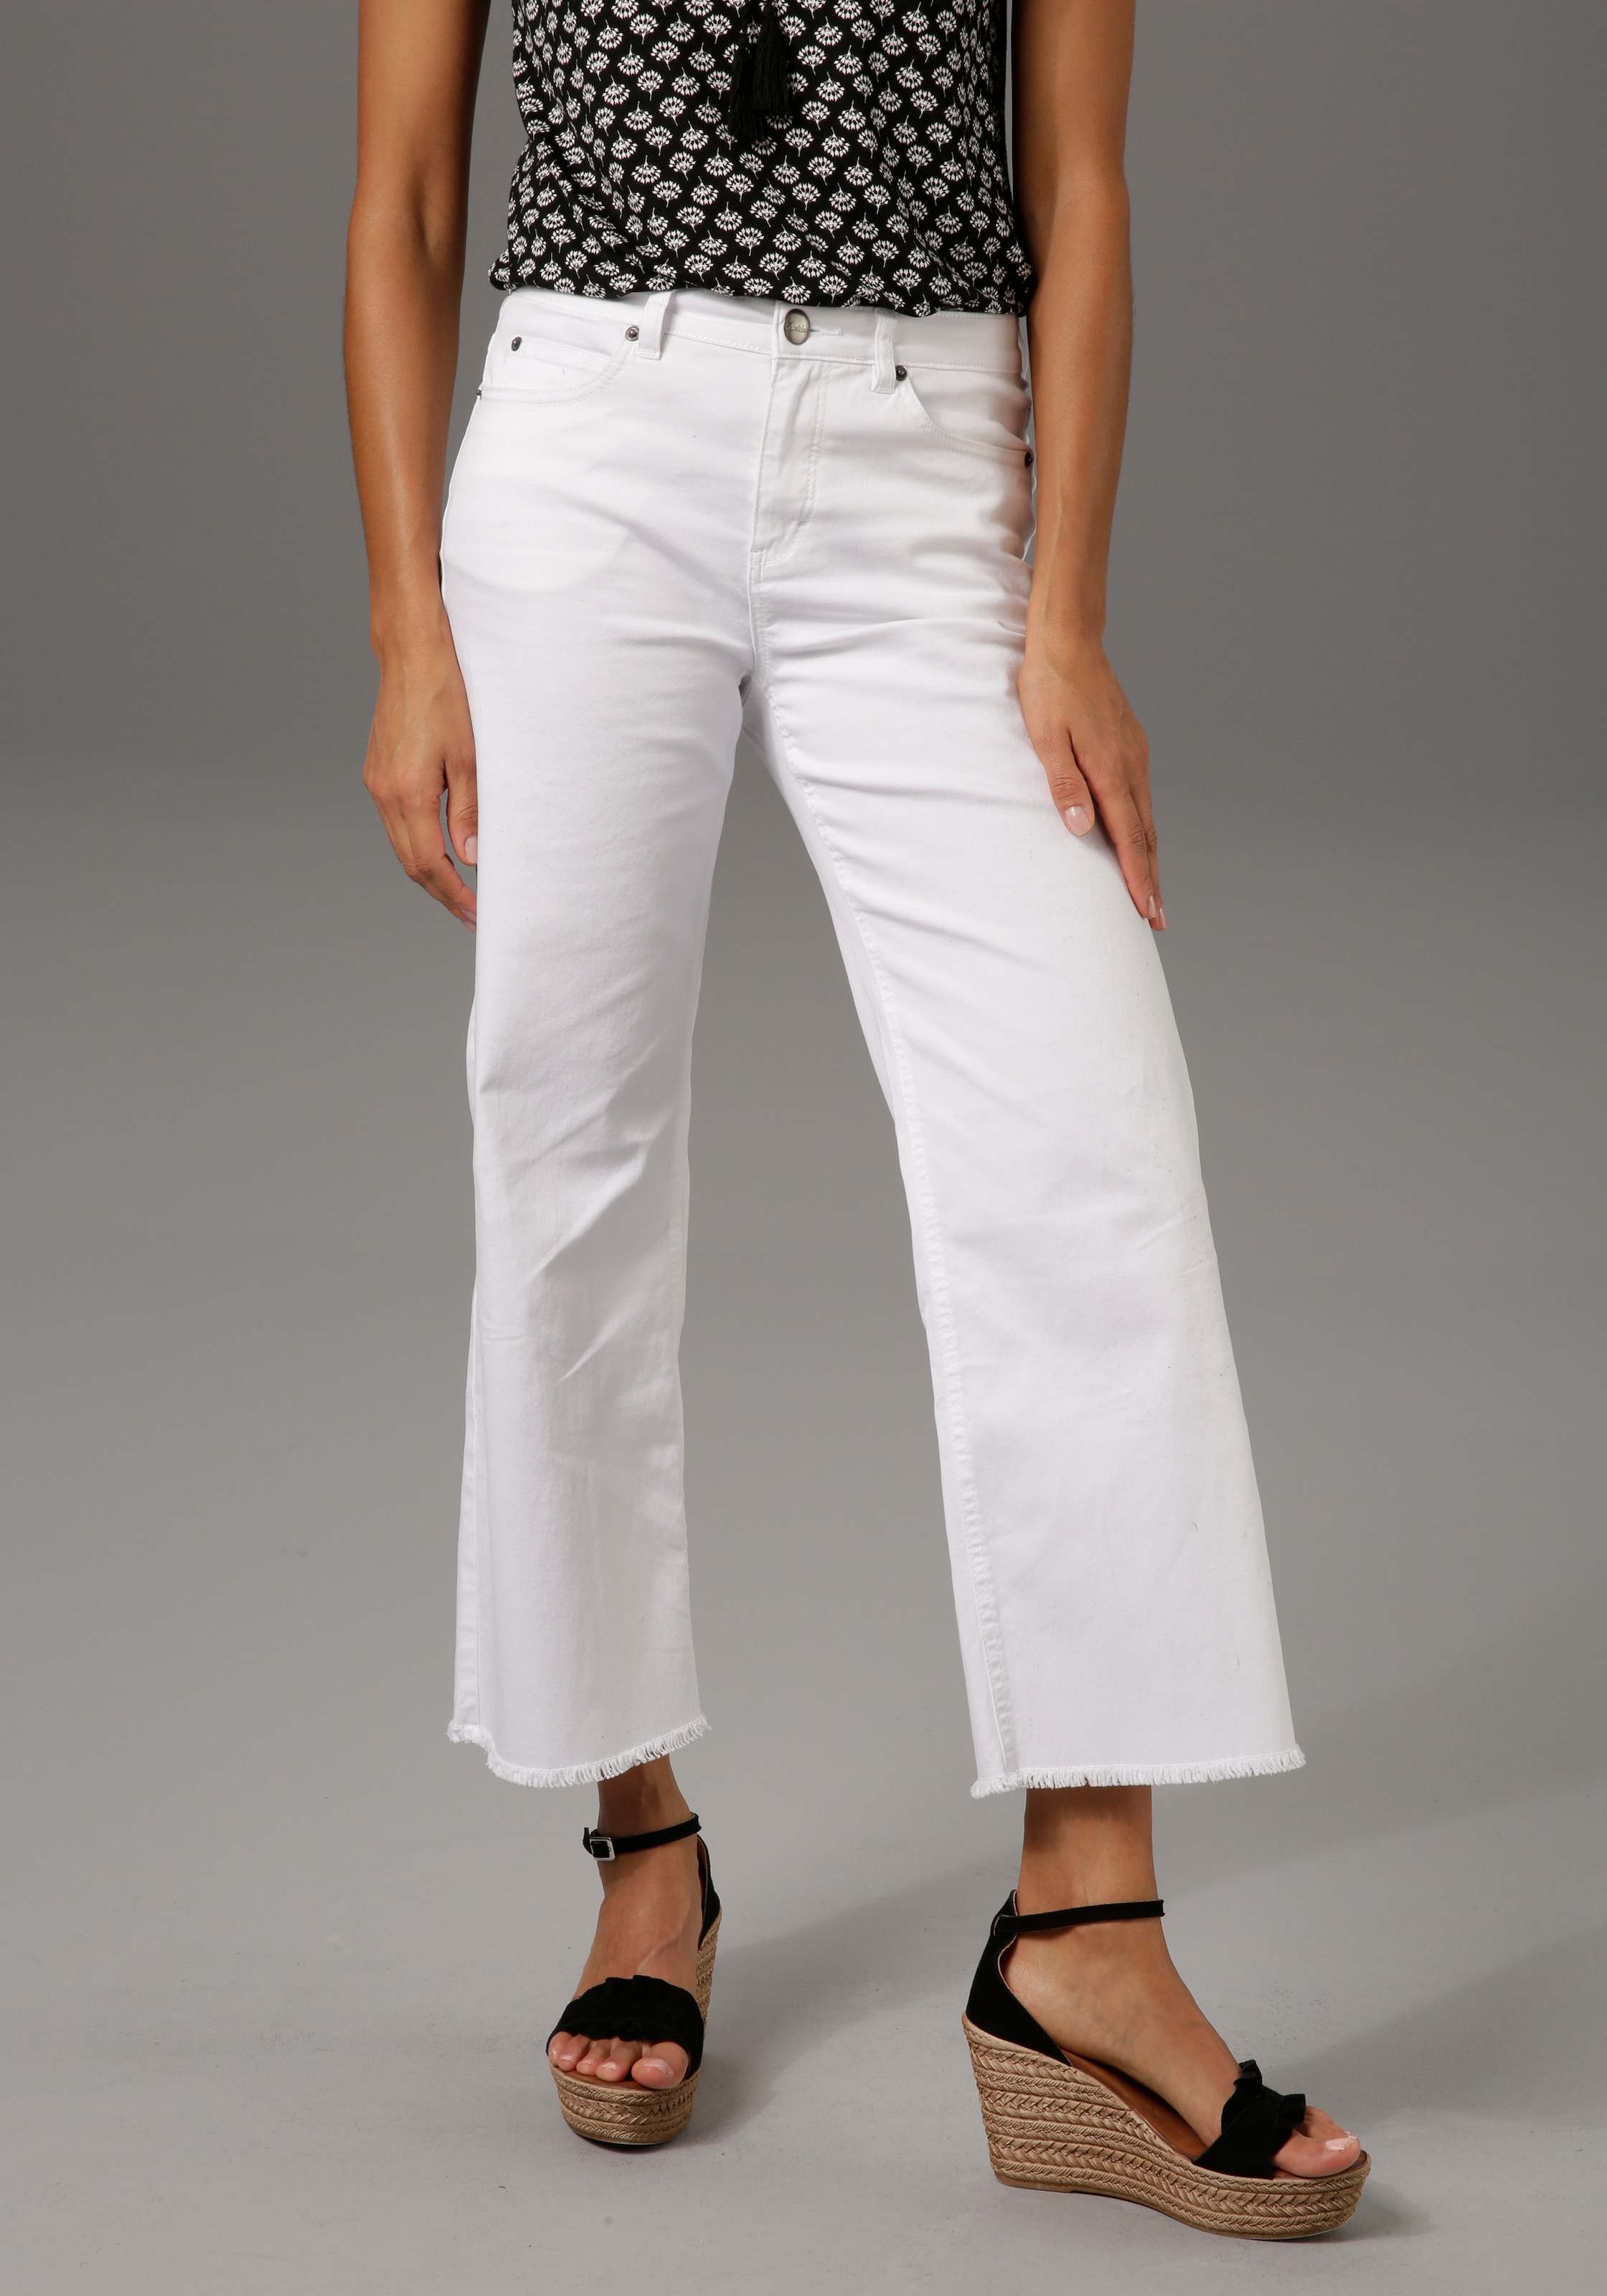 7/8 Jeans Damen - günstige Mode online bestellen